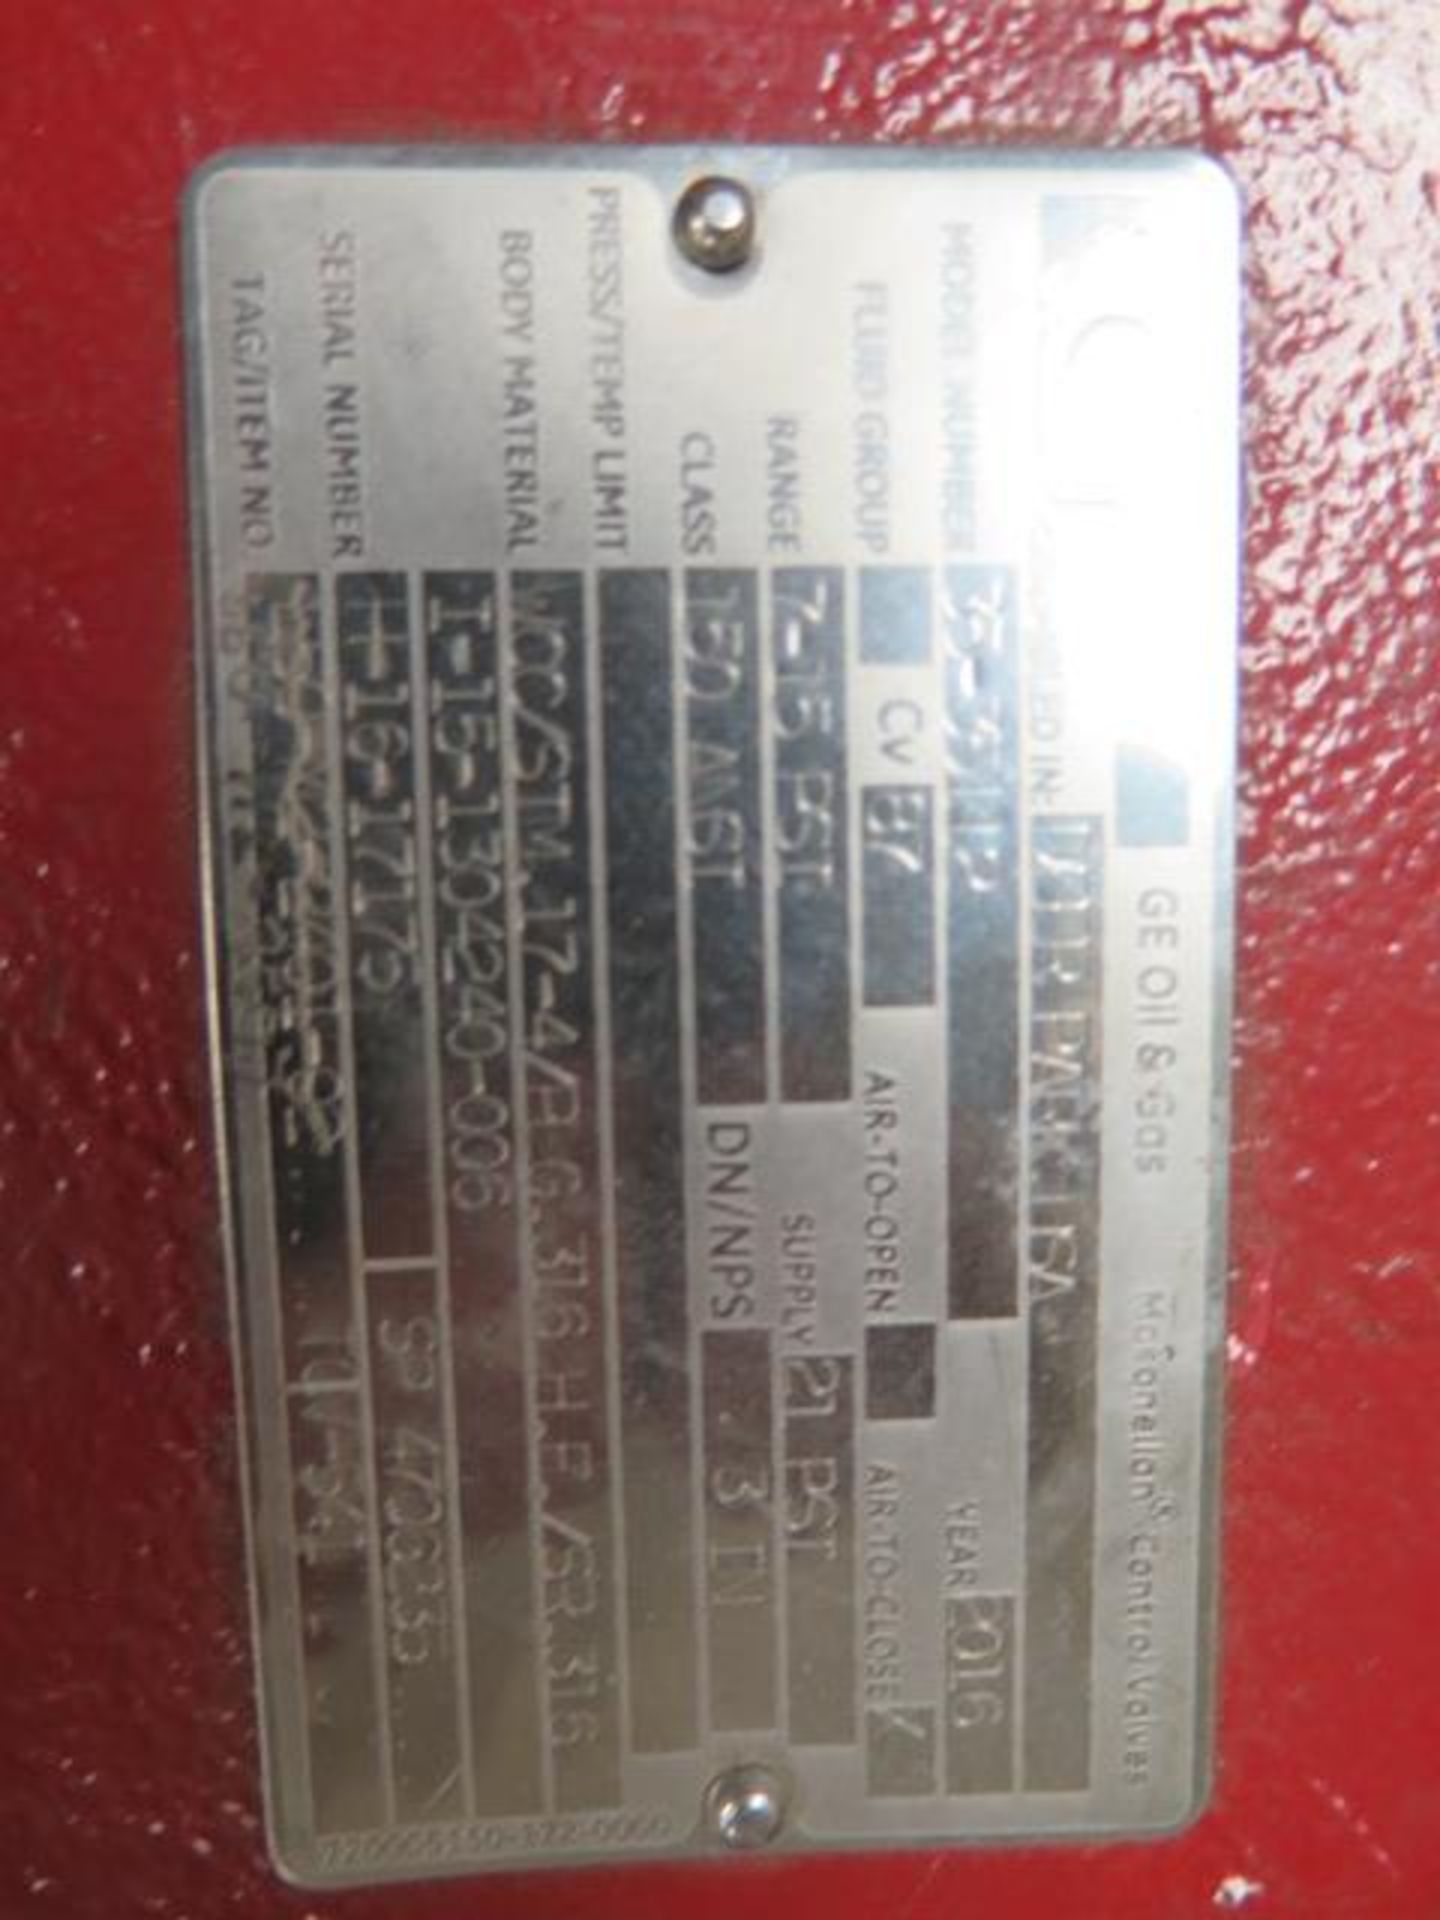 Marathon Fluid Pump 208-230/460V and Bell & Gossett 1/12Hp Fluid Pump 115V (SOLD AS-IS - NO WARRANTY - Image 8 of 8